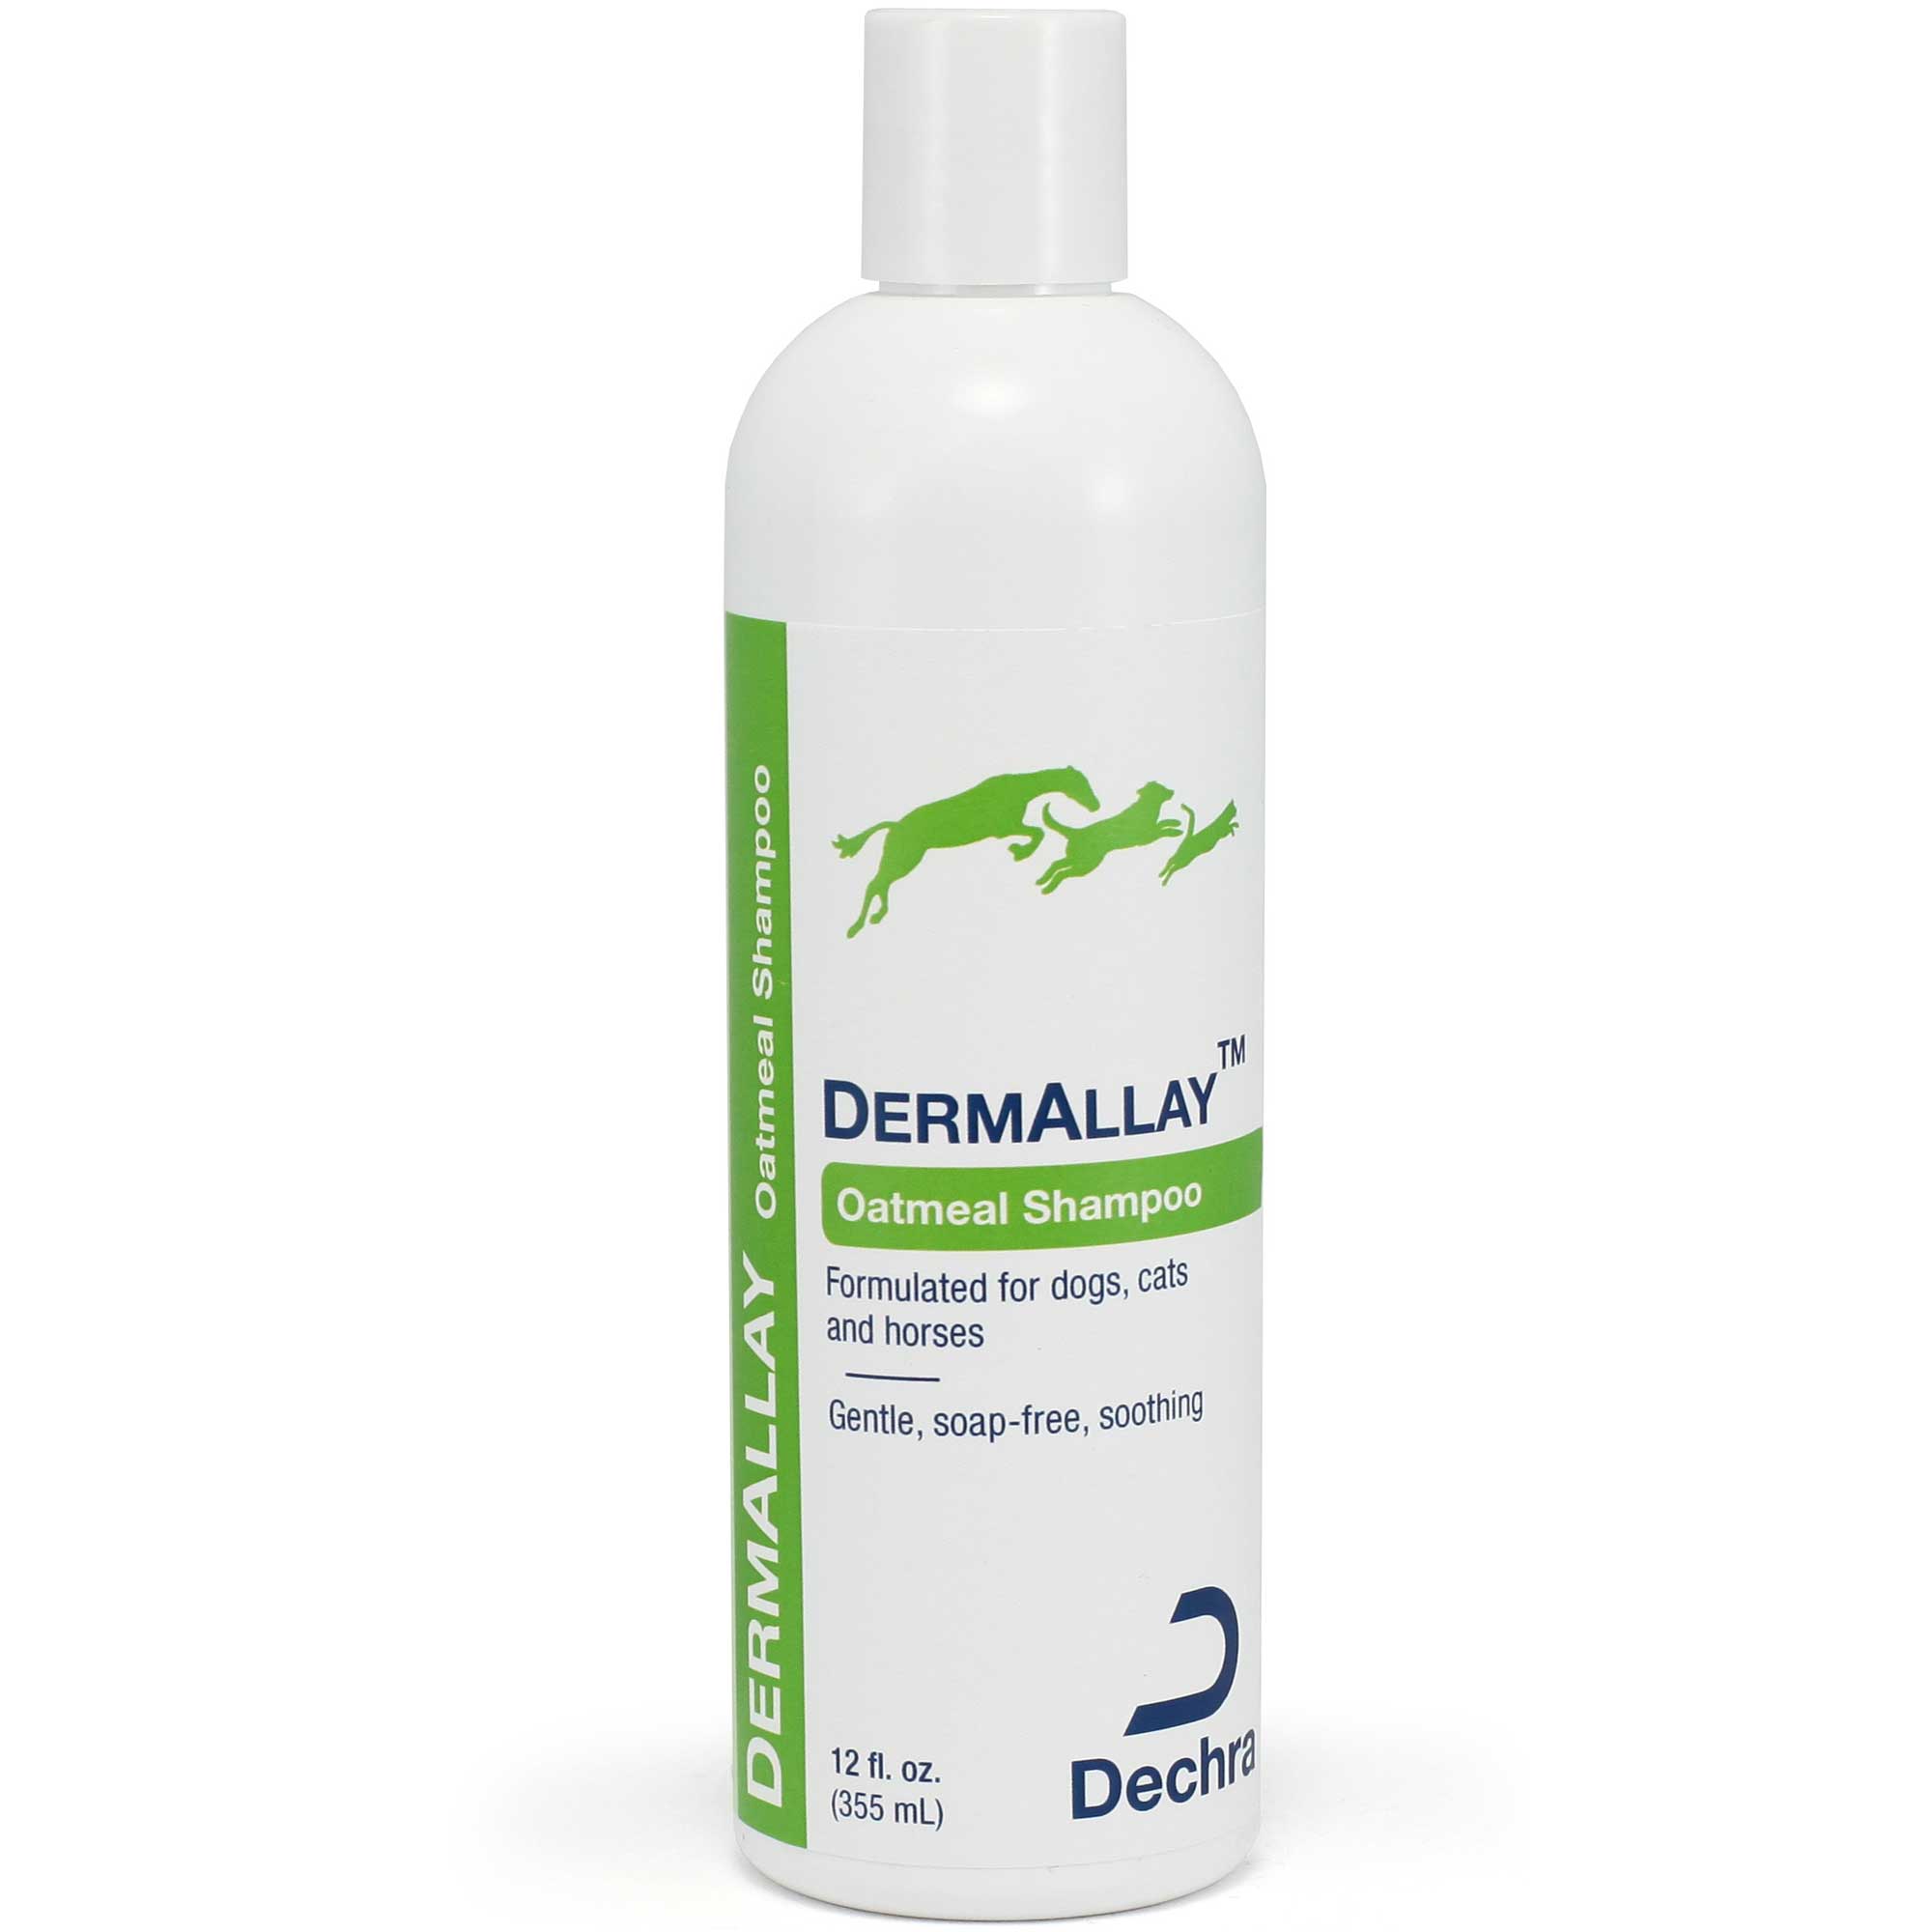 DermAllay Oatmeal Shampoo Usage